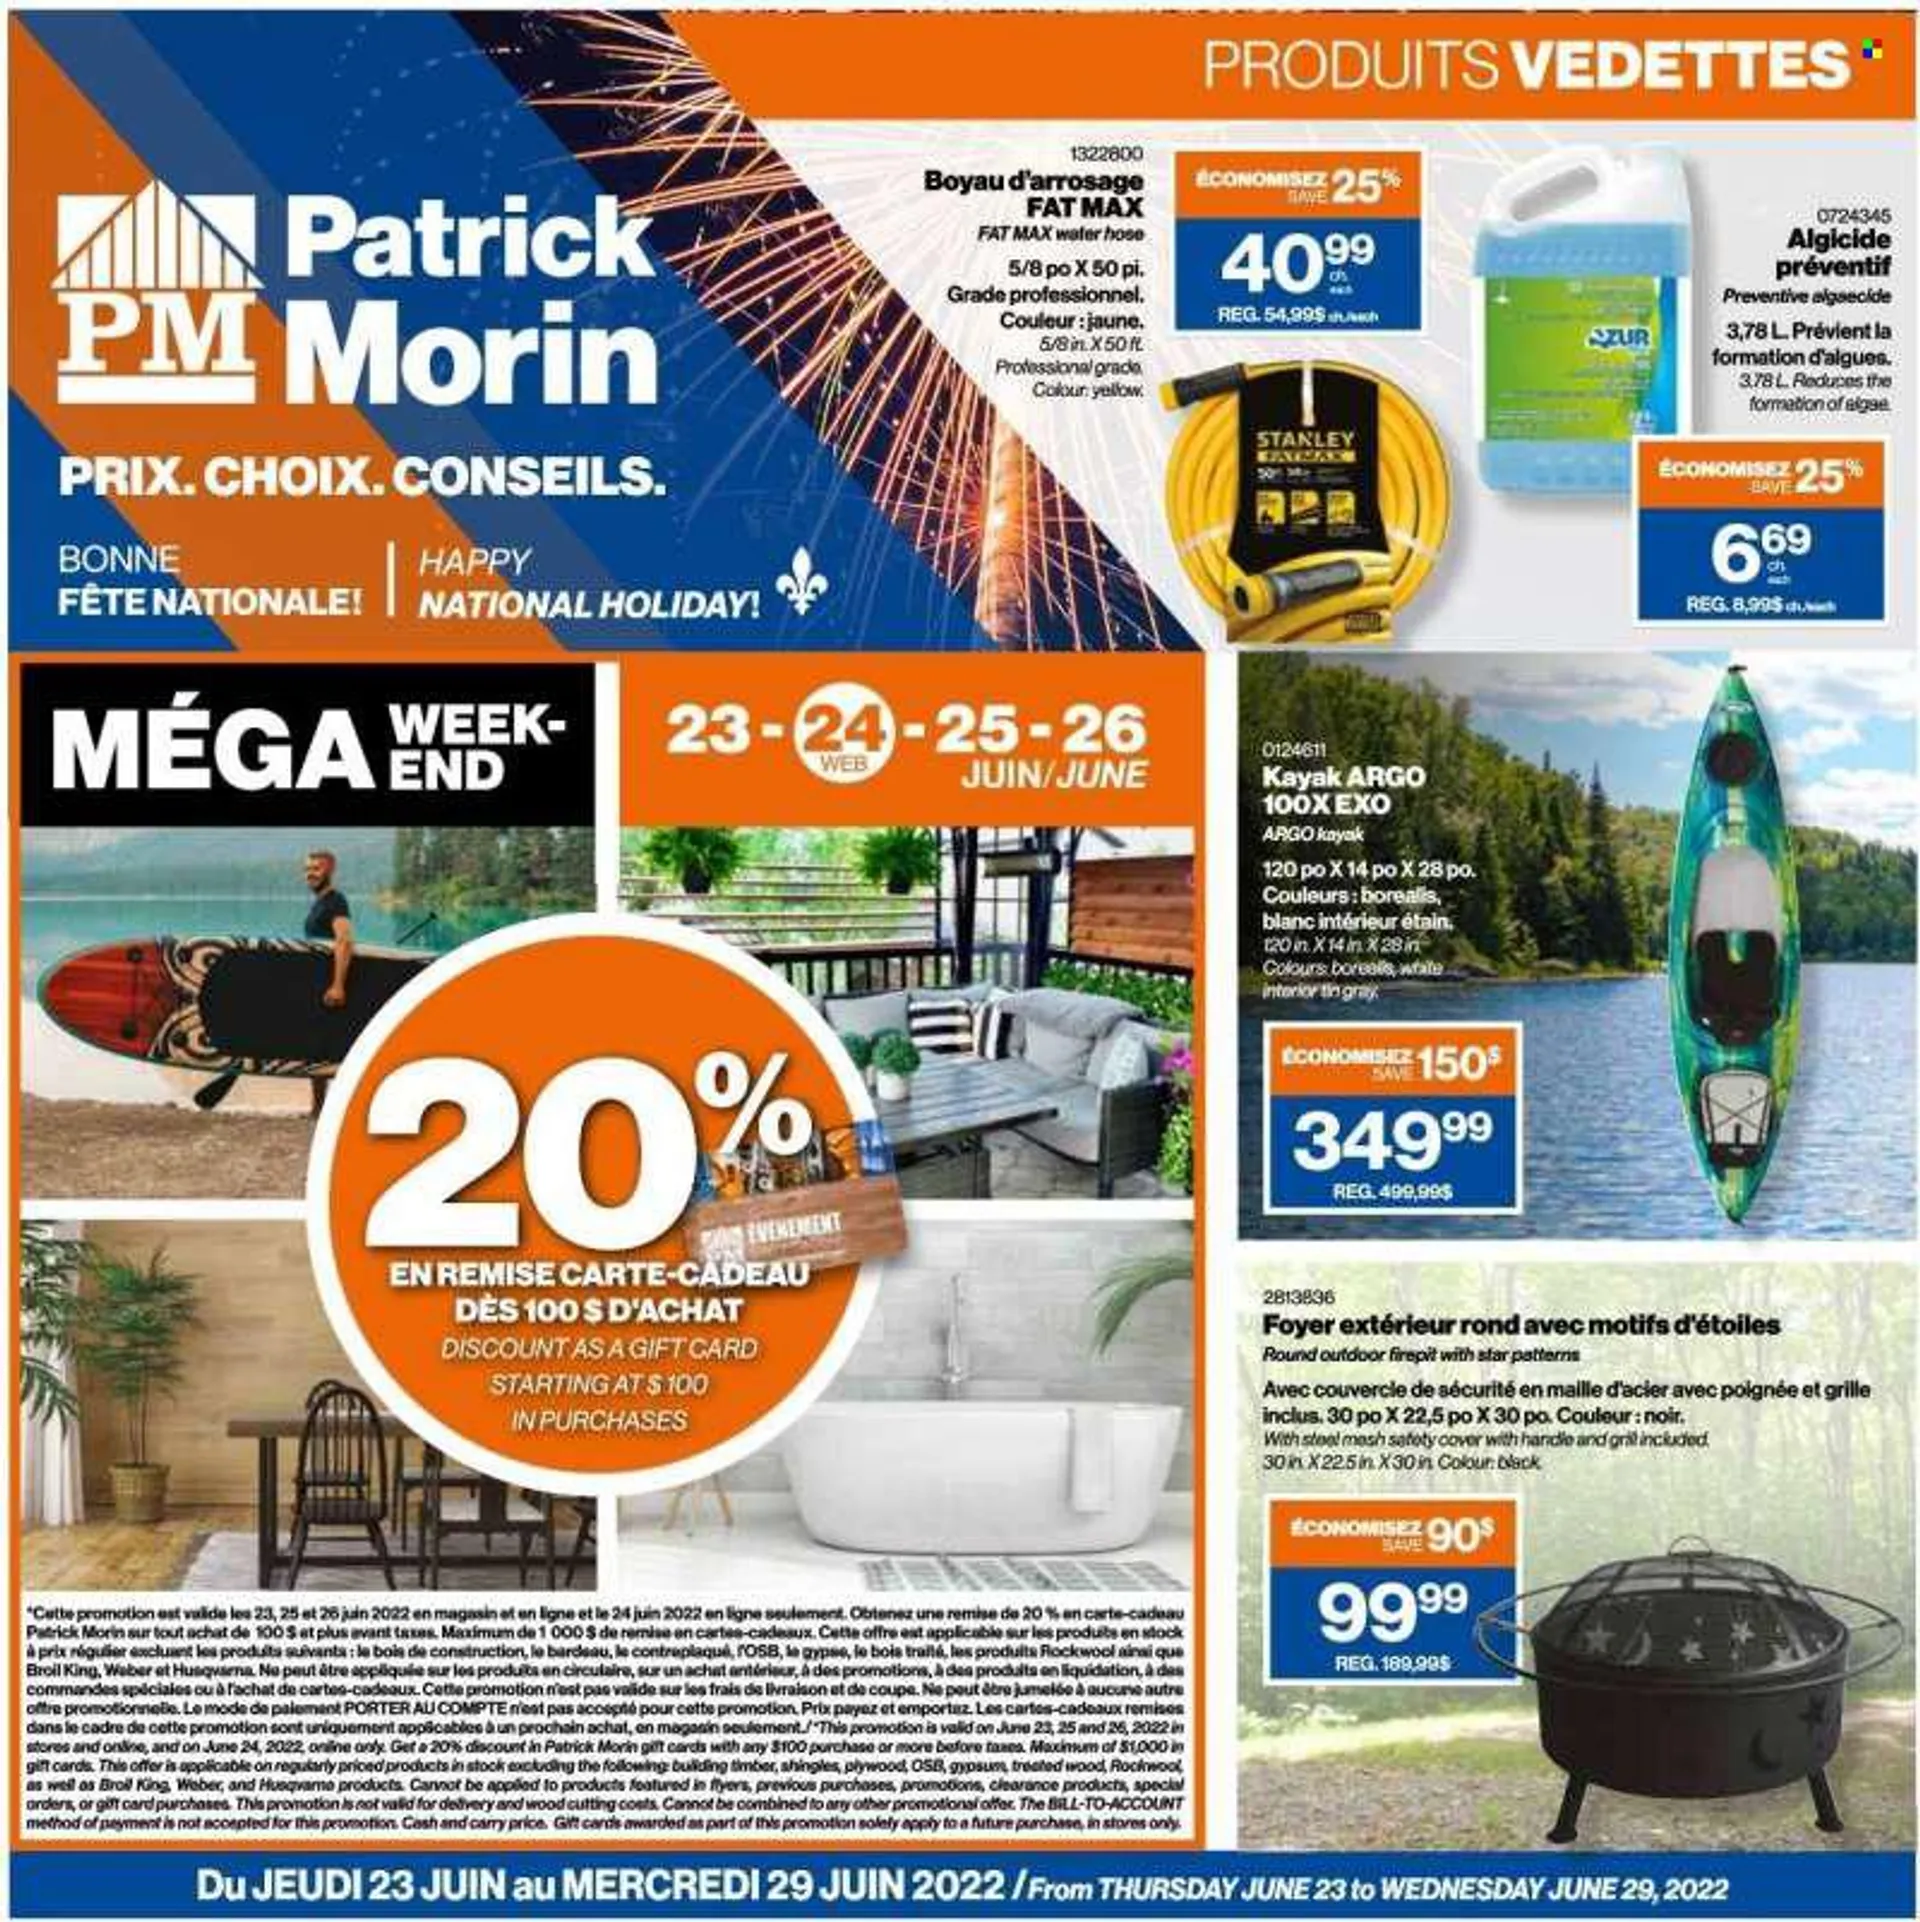 Patrick Morin Flyer - June 23, 2022 - June 29, 2022 - Sales products - Stanley, shingle, plywood, Husqvarna, Weber, garden hose. Page 1.